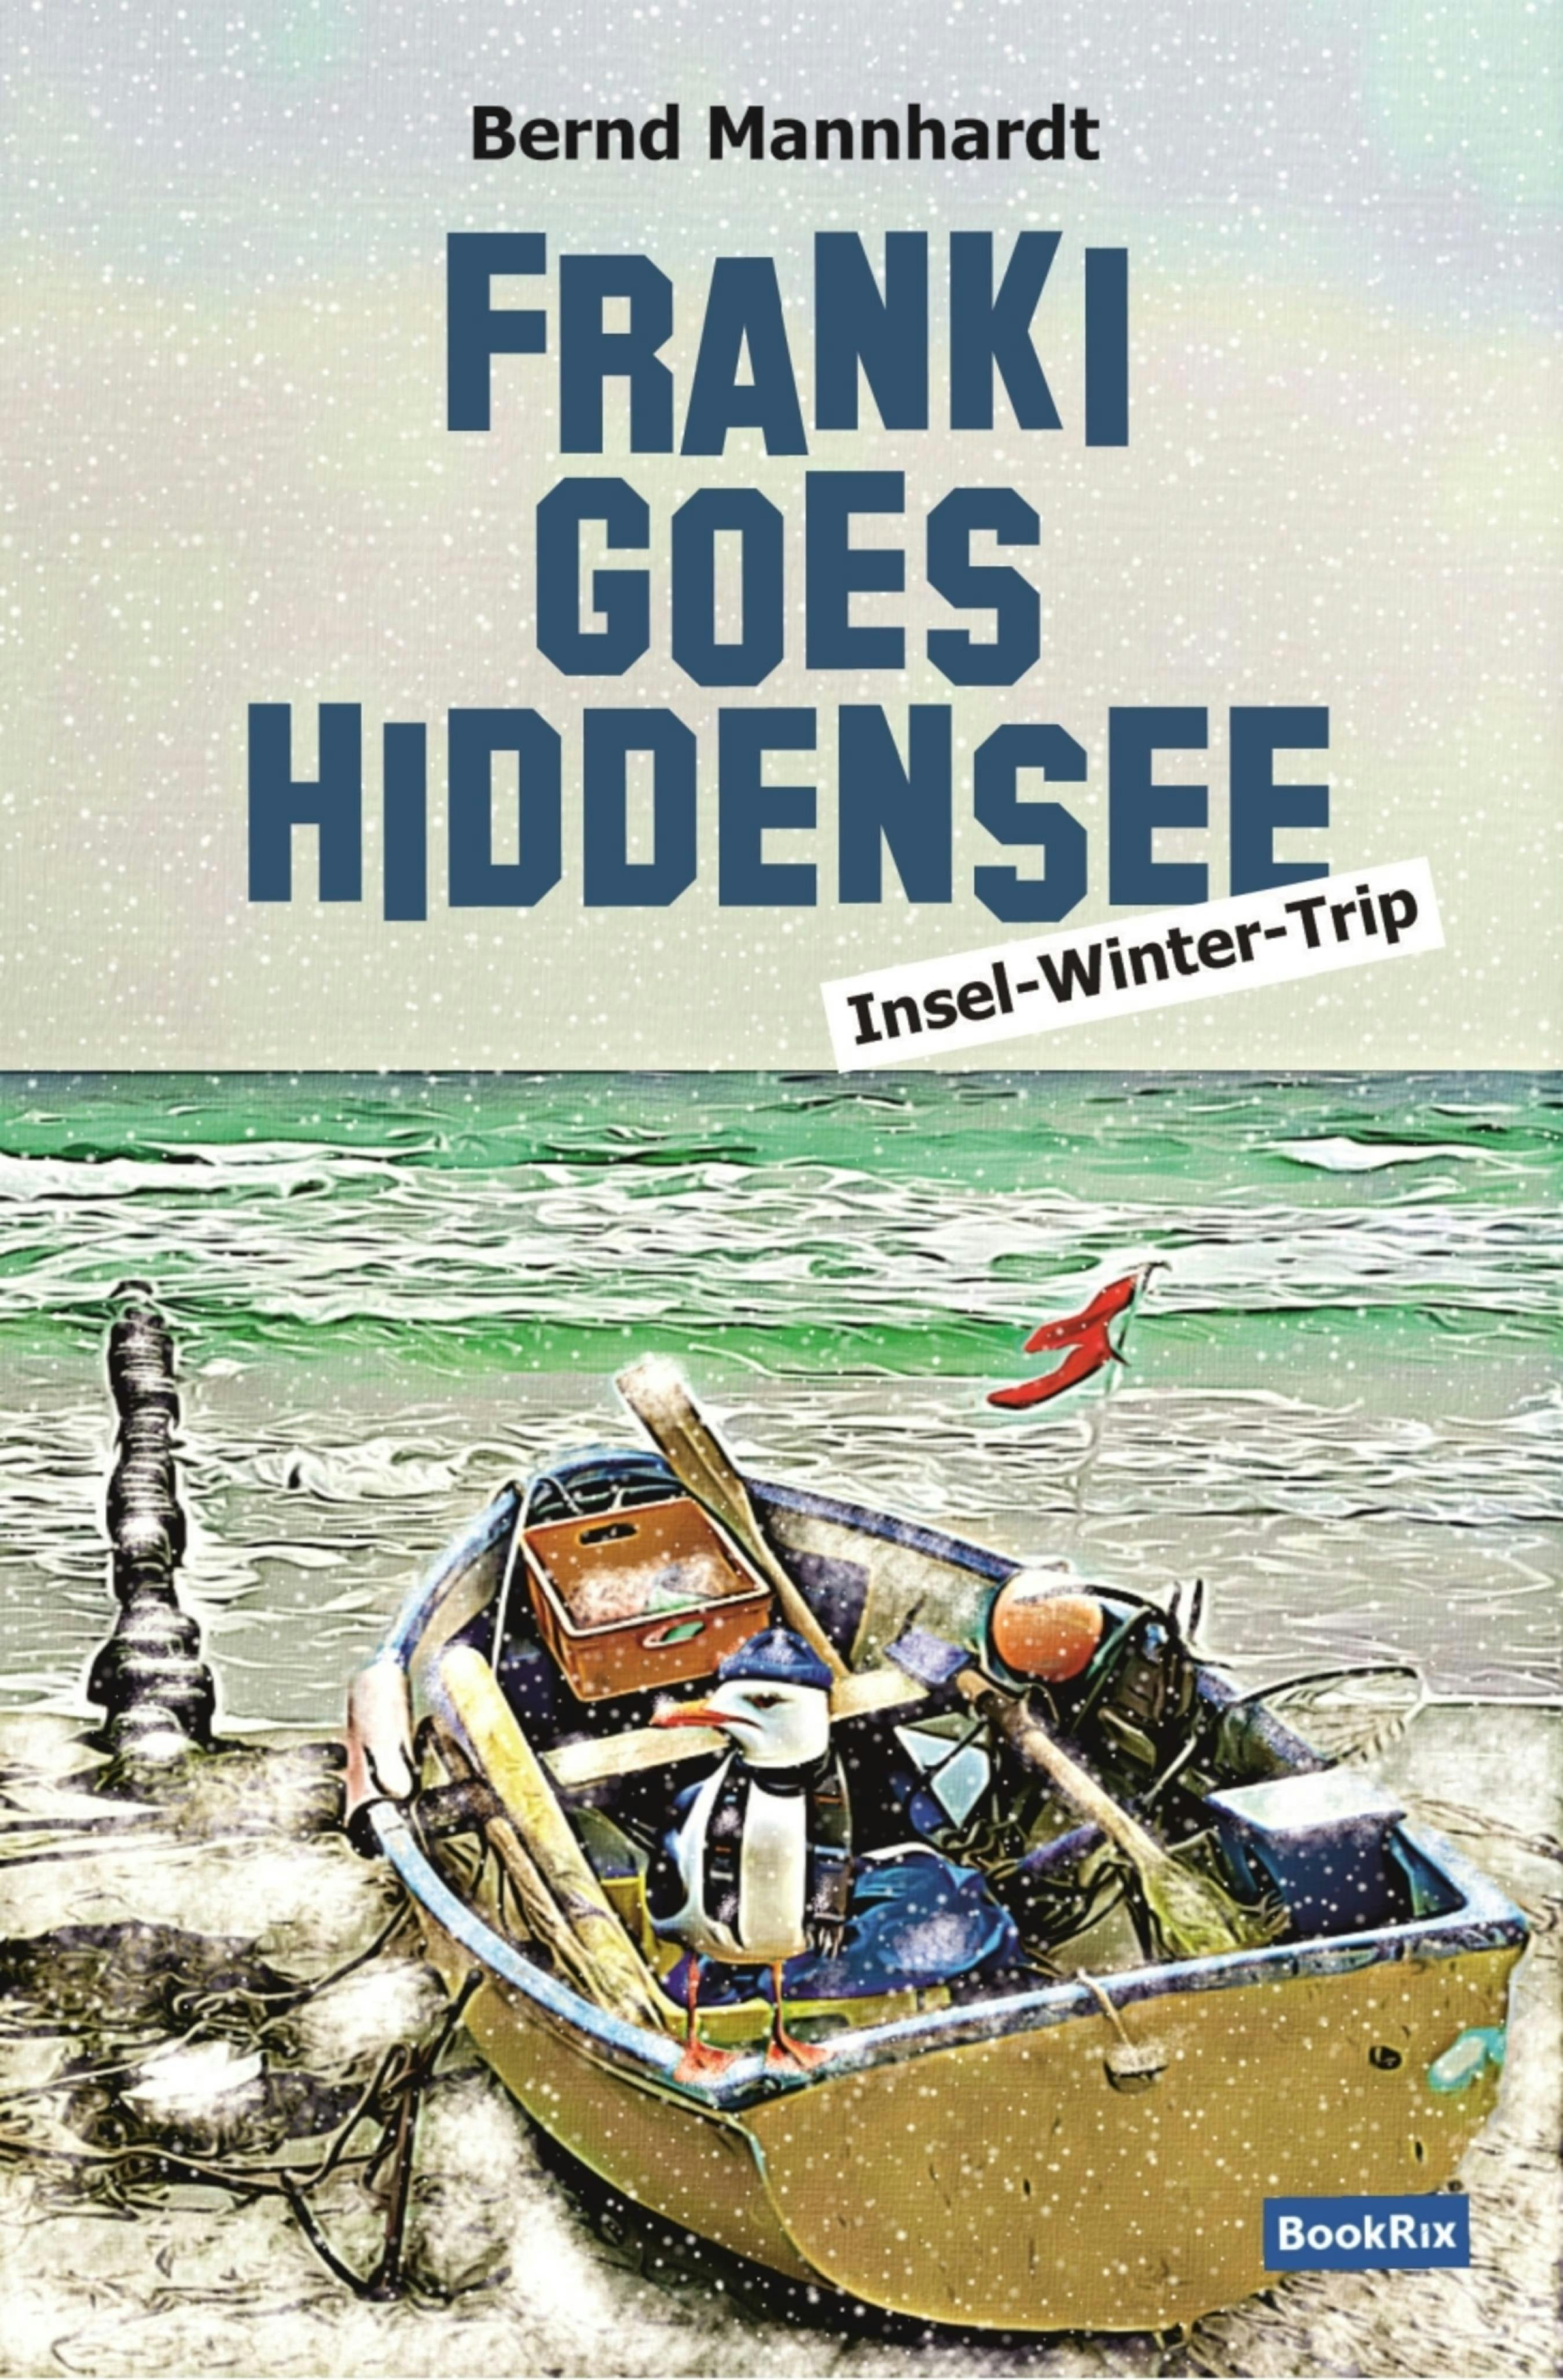 Franki goes Hiddensee: Insel-Winter-Trip - Bernd Mannhardt